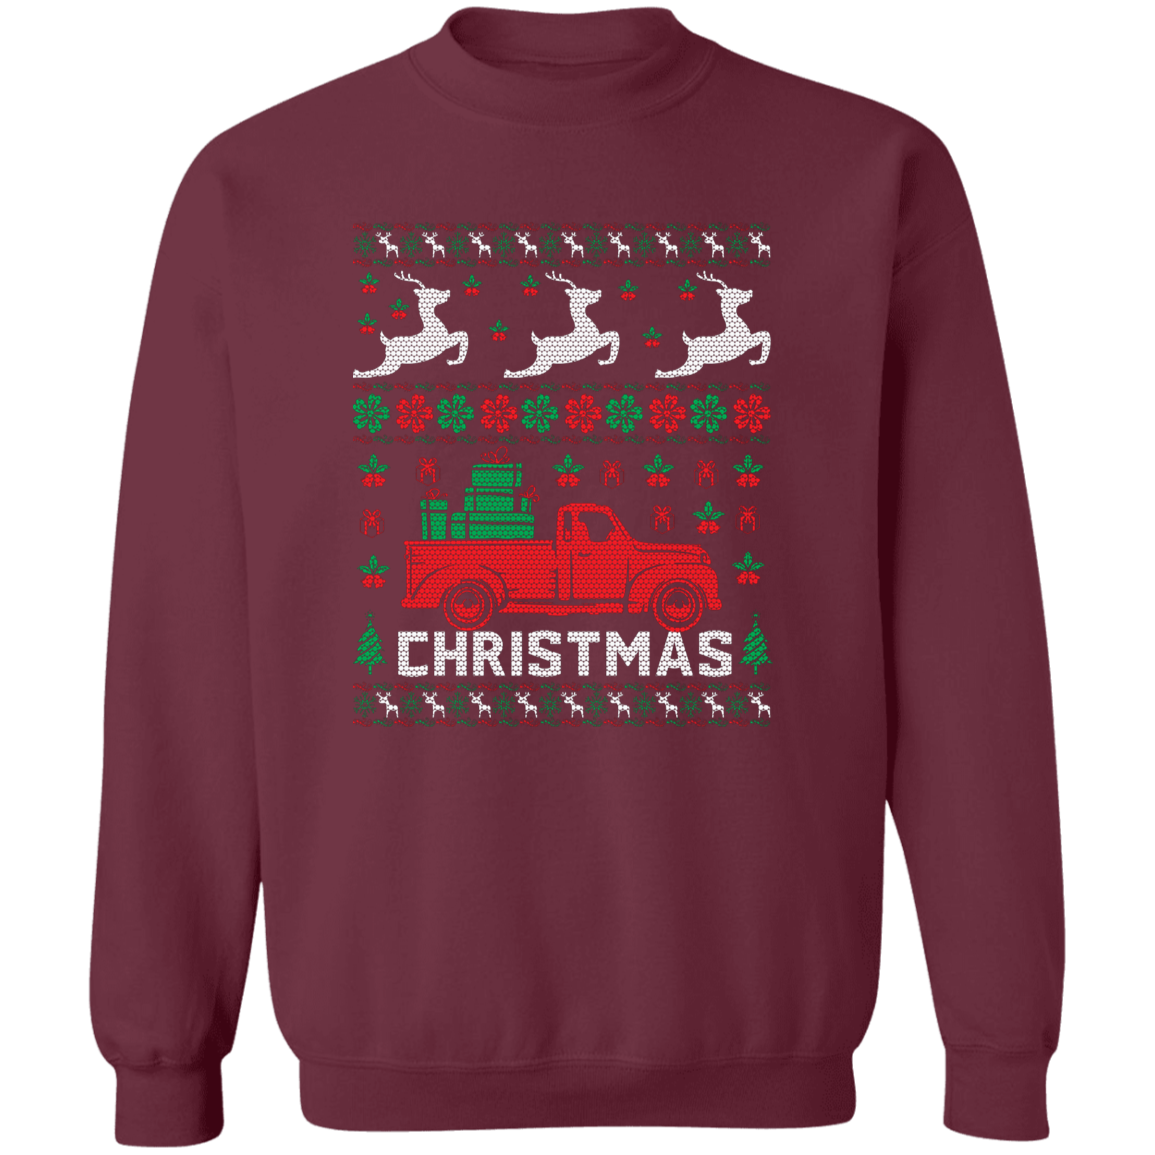 Presents Christmas Farm Truck Sweatshirt